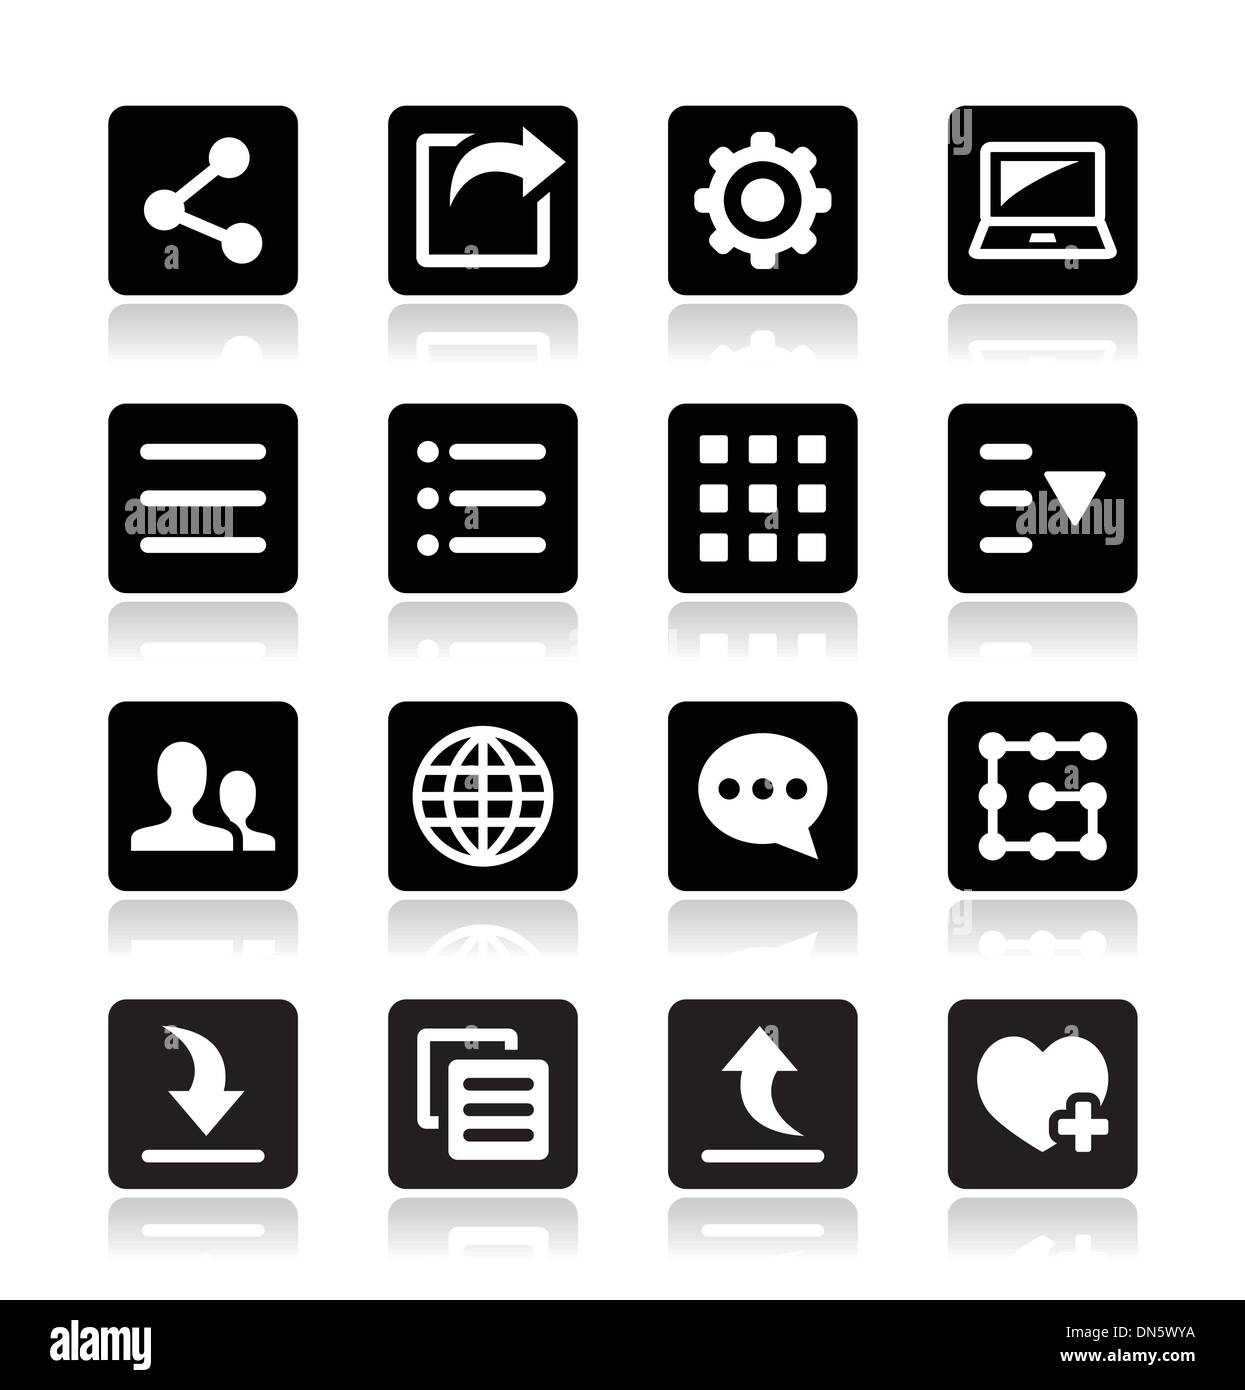 Menu settings tools icons set Stock Vector